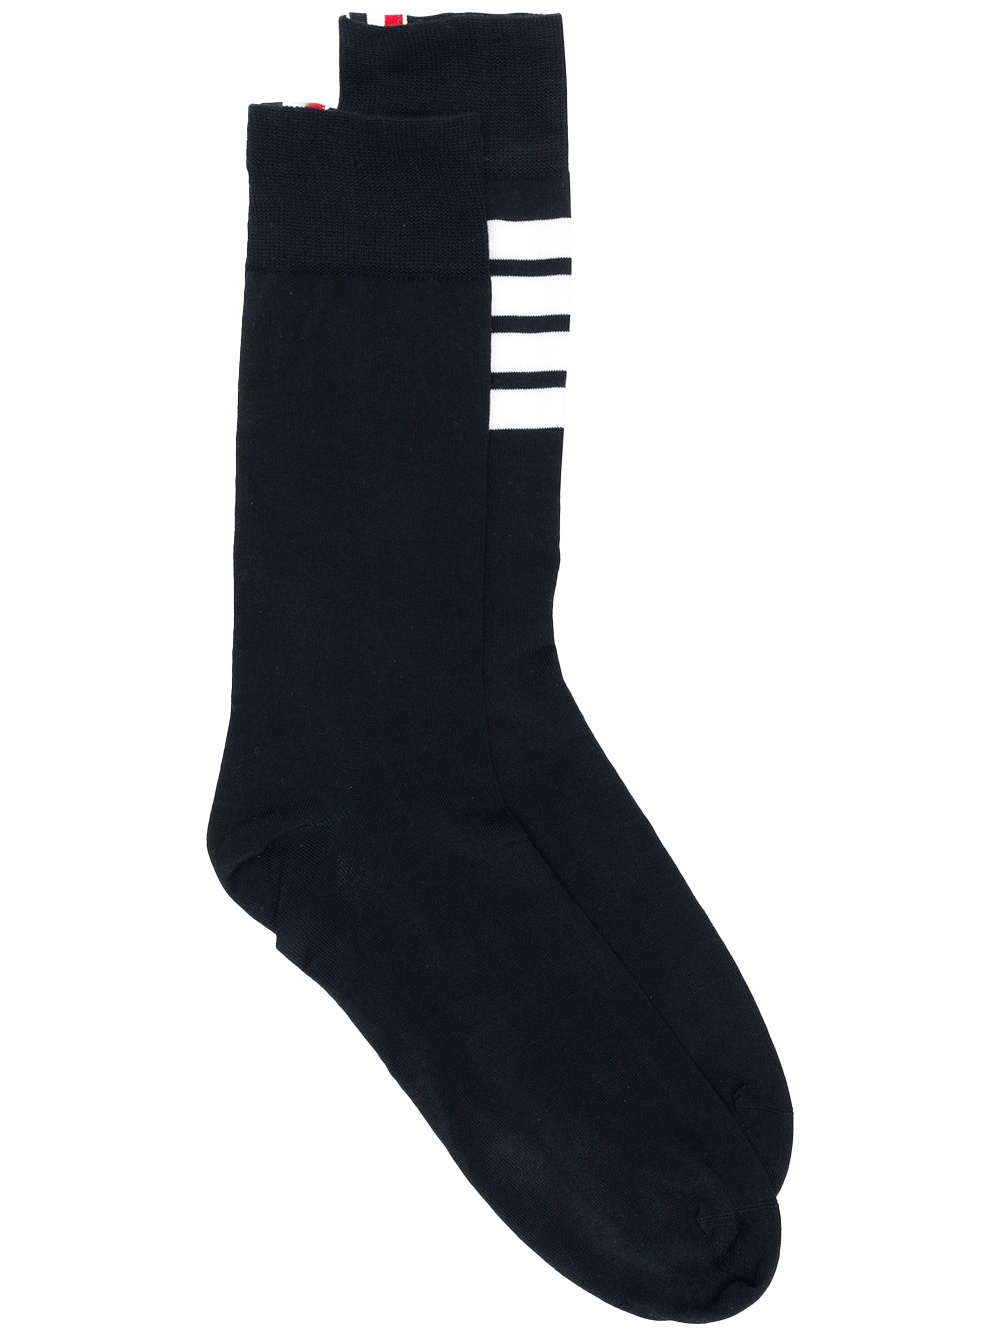 Mid Calf Socks With White 4 Bar - 1